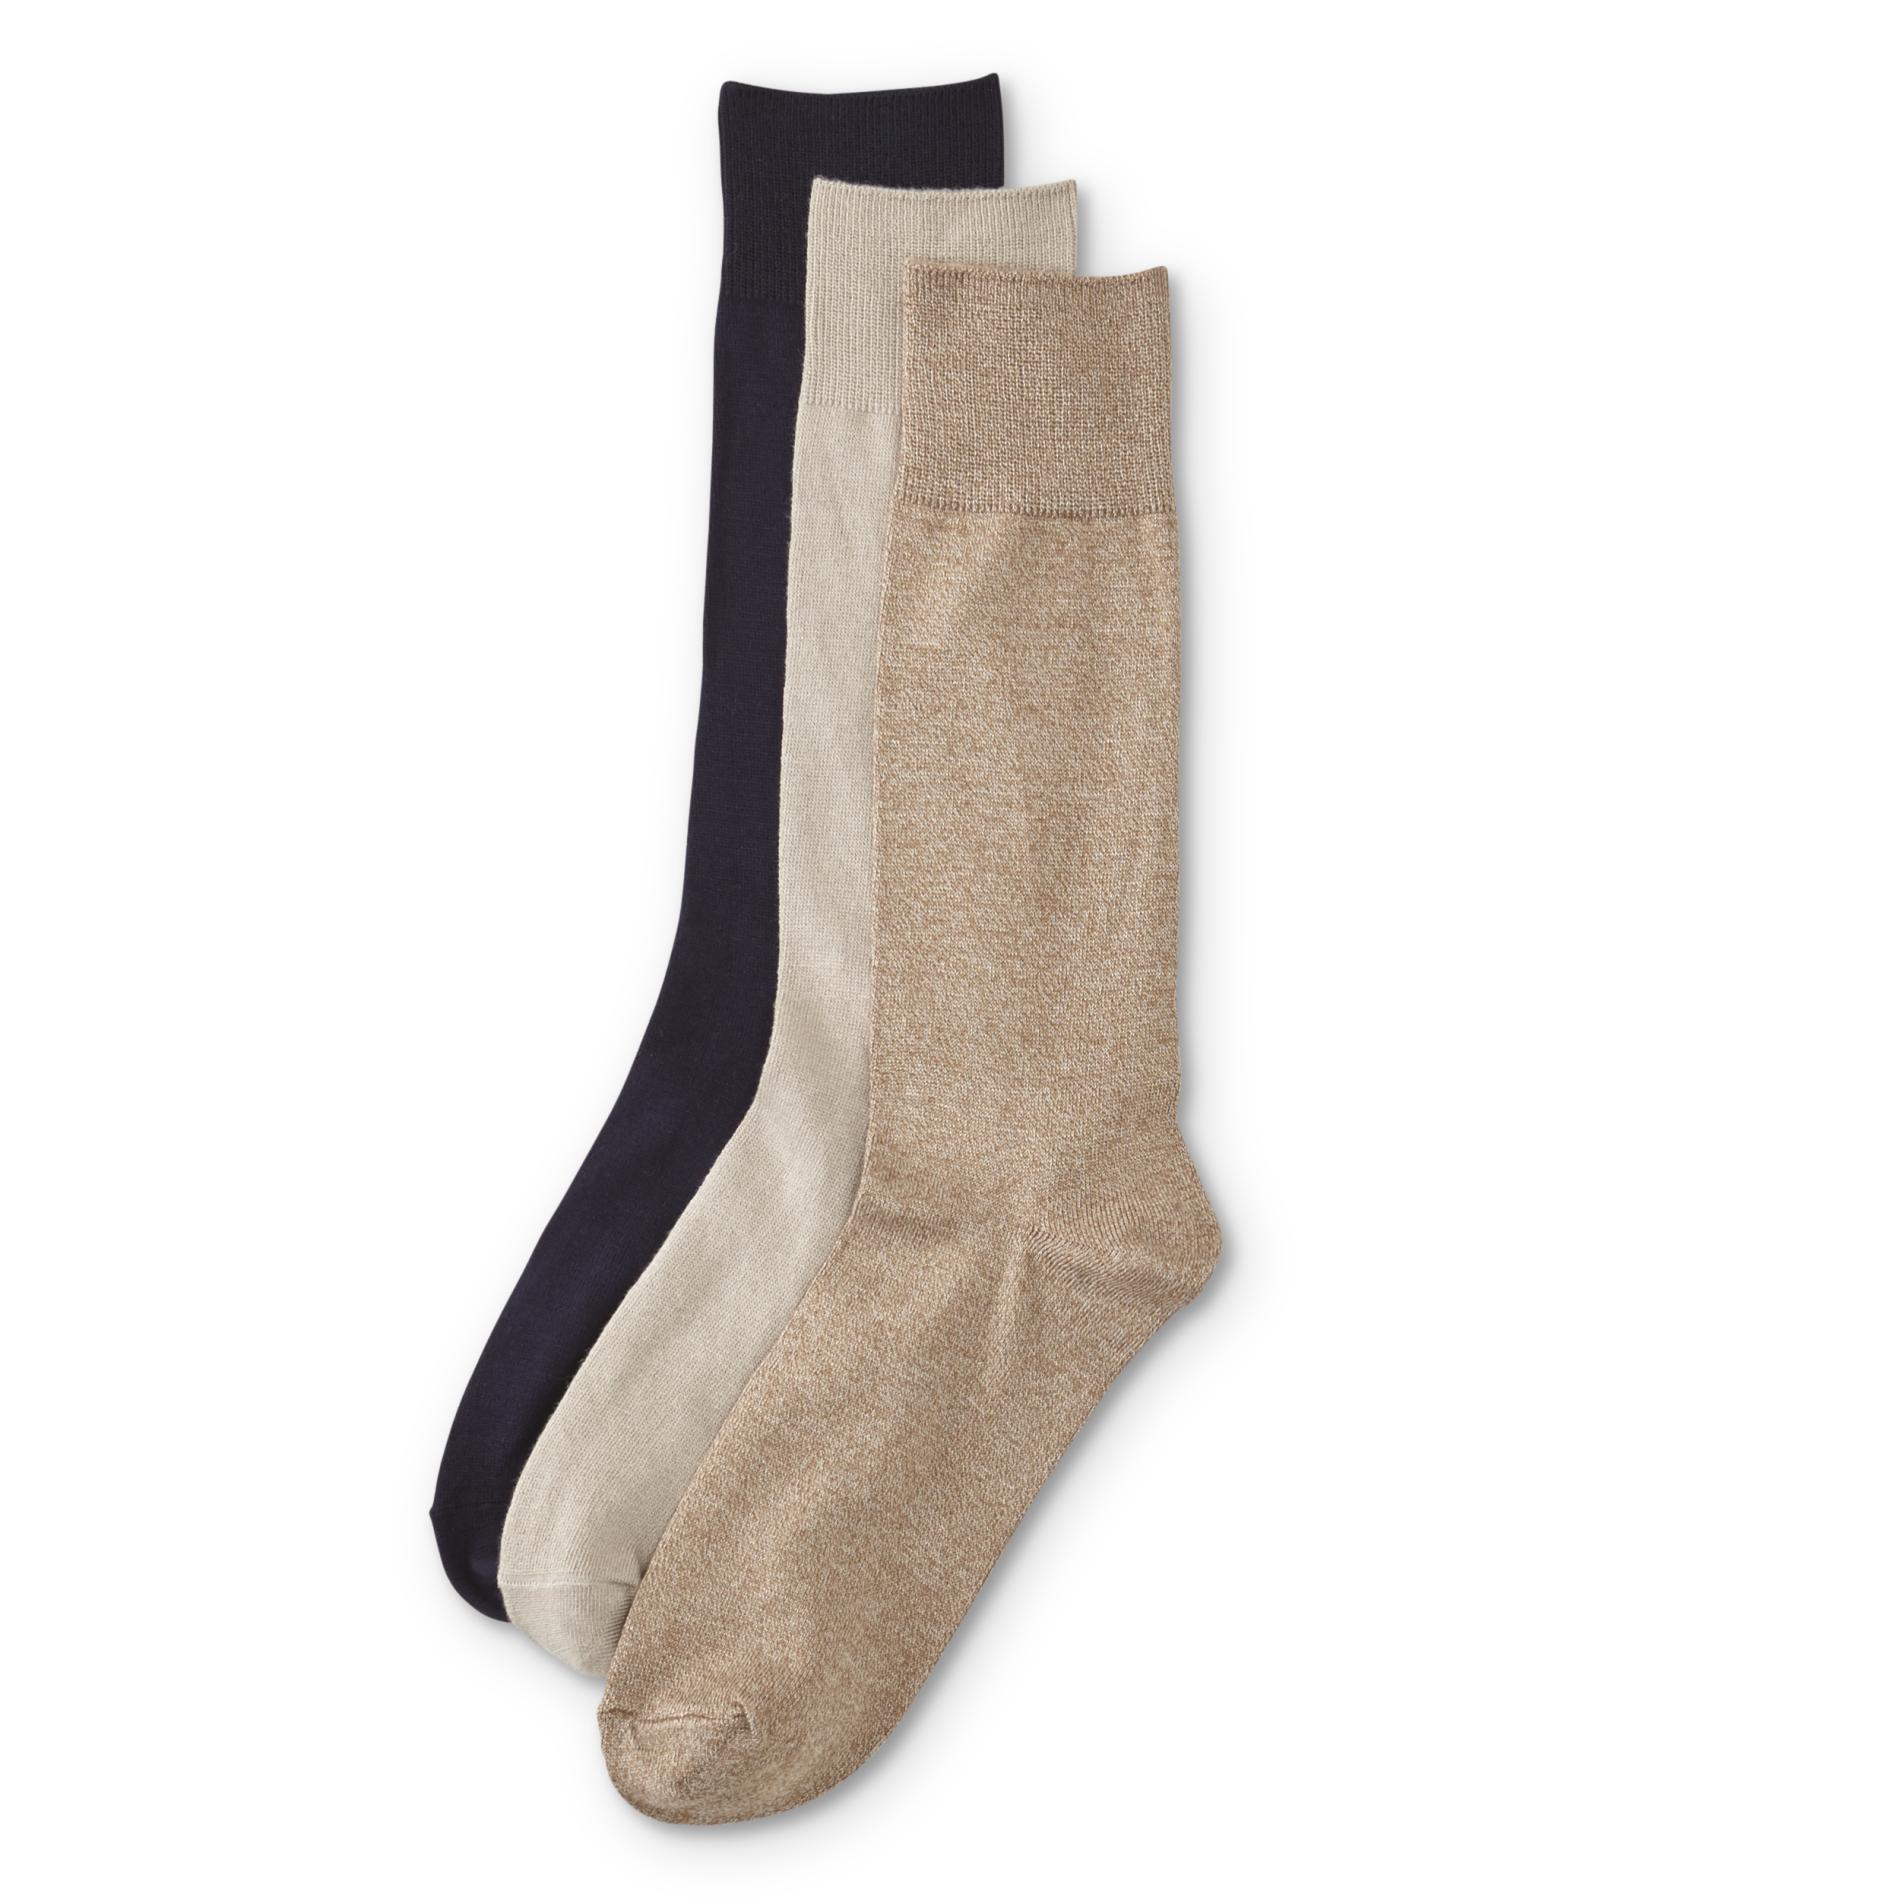 Basic Editions Men's 3-Pairs Crew Socks - Assortment